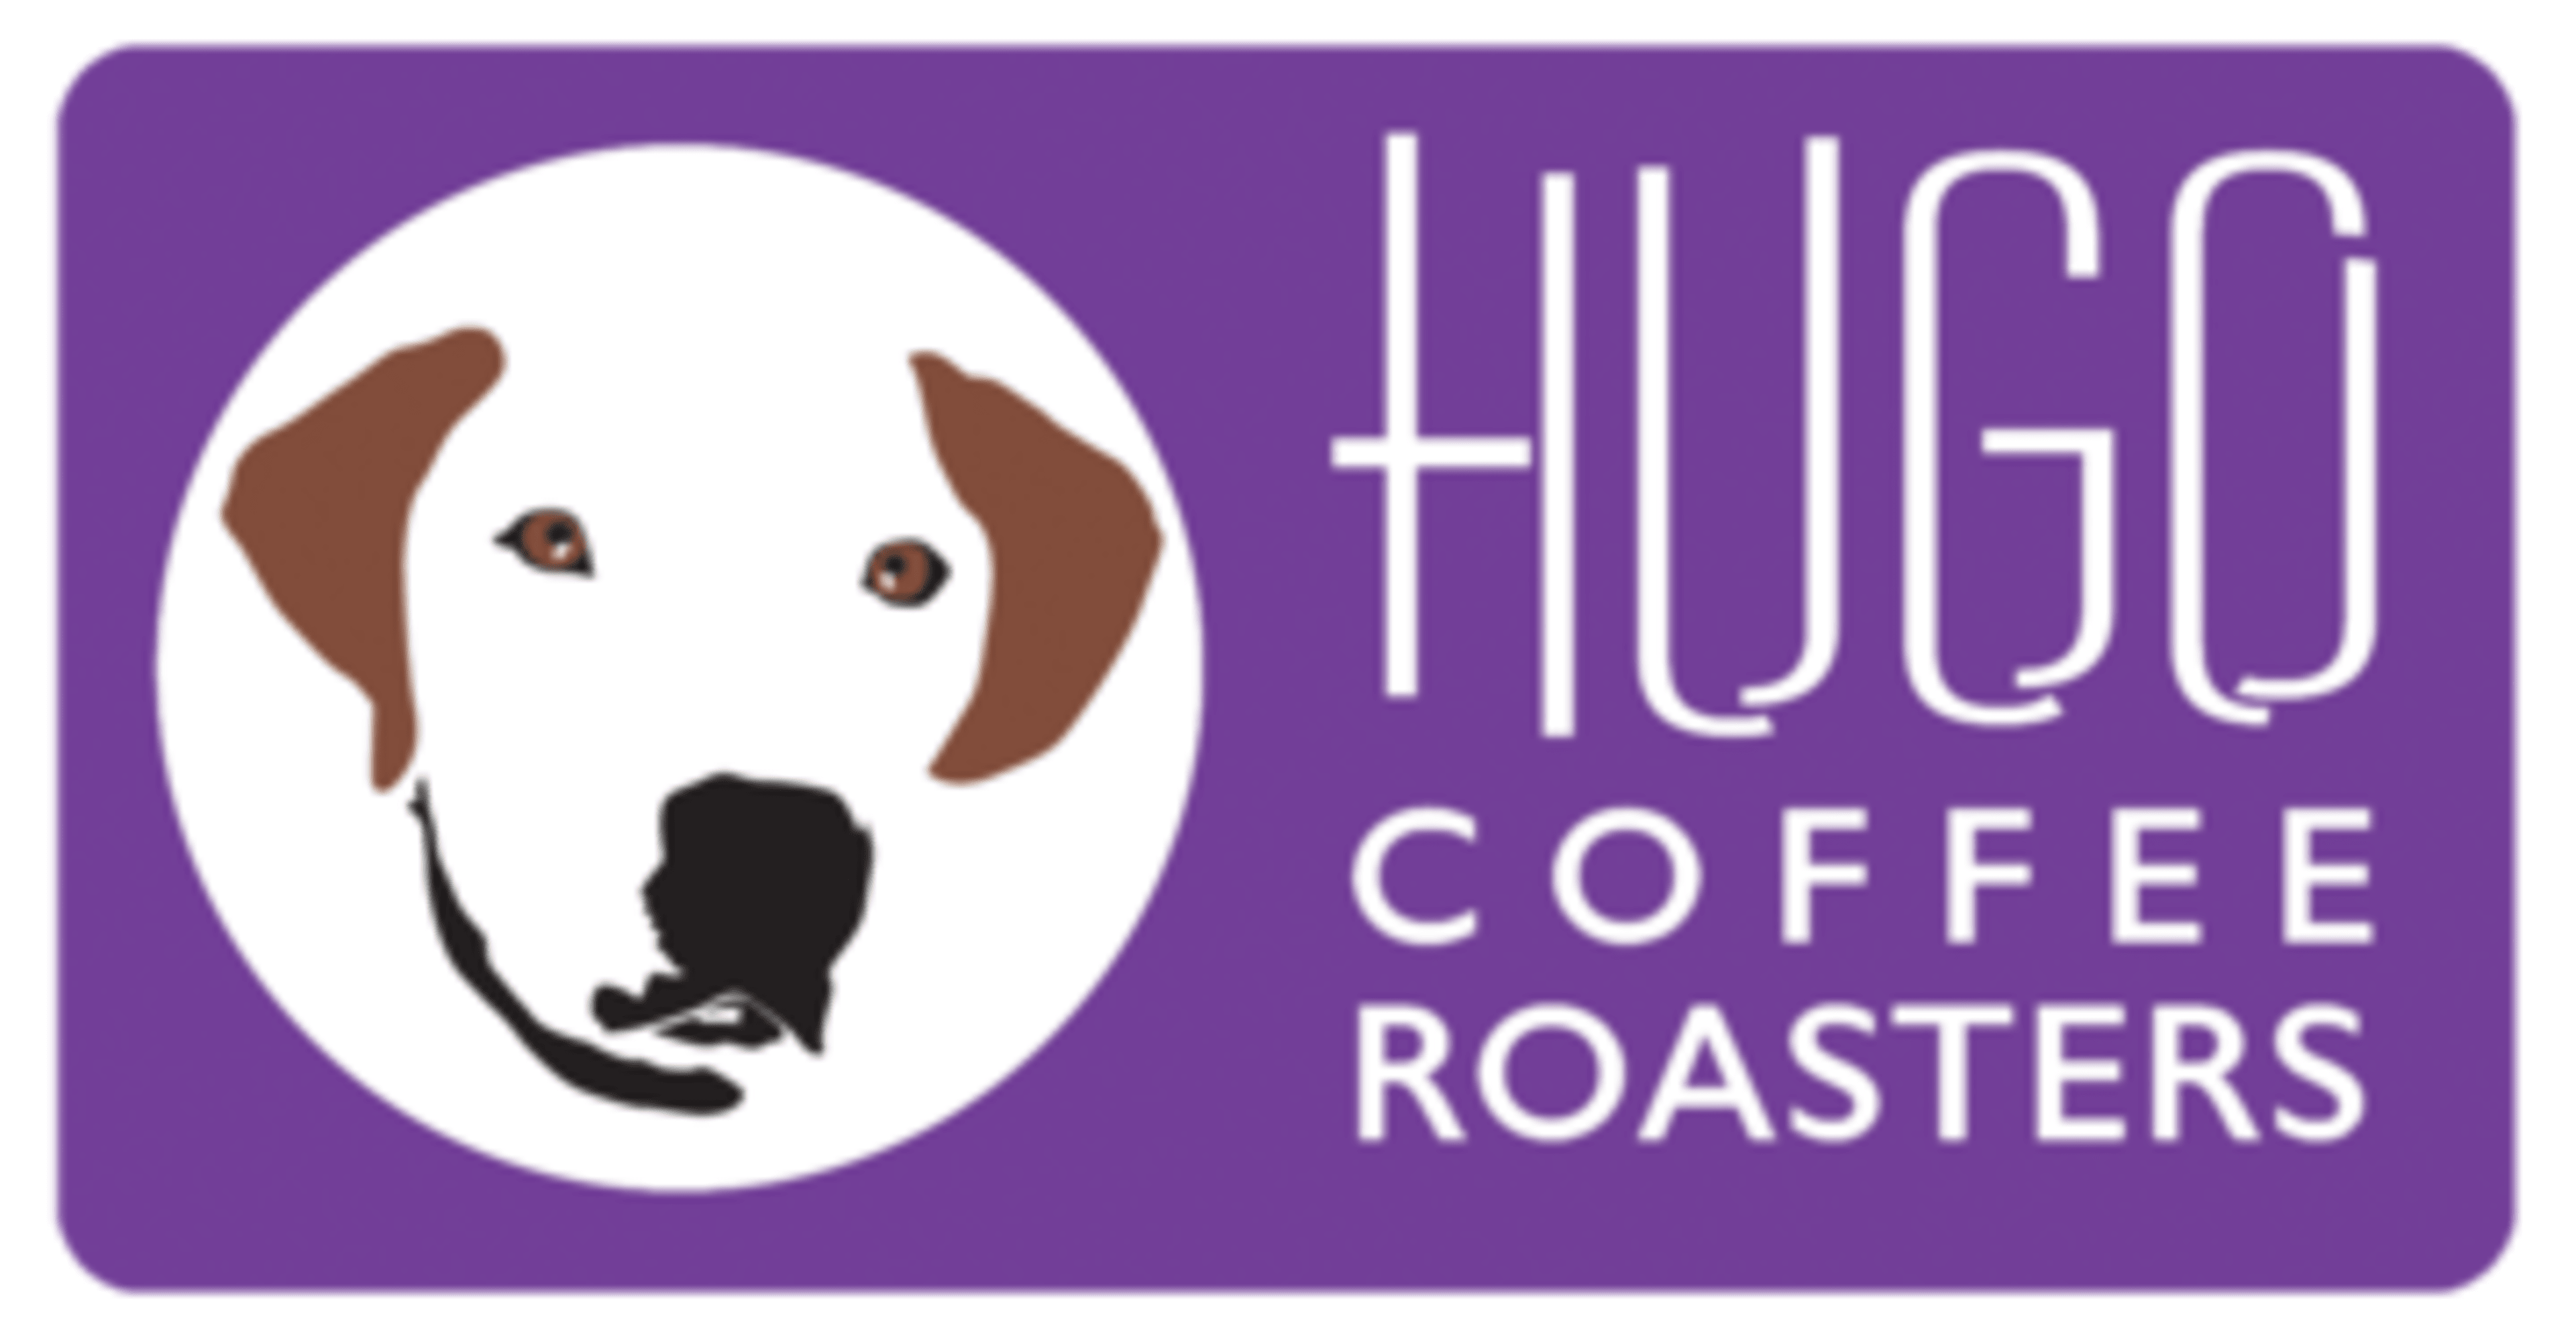 Hugo Coffee RoastersCode